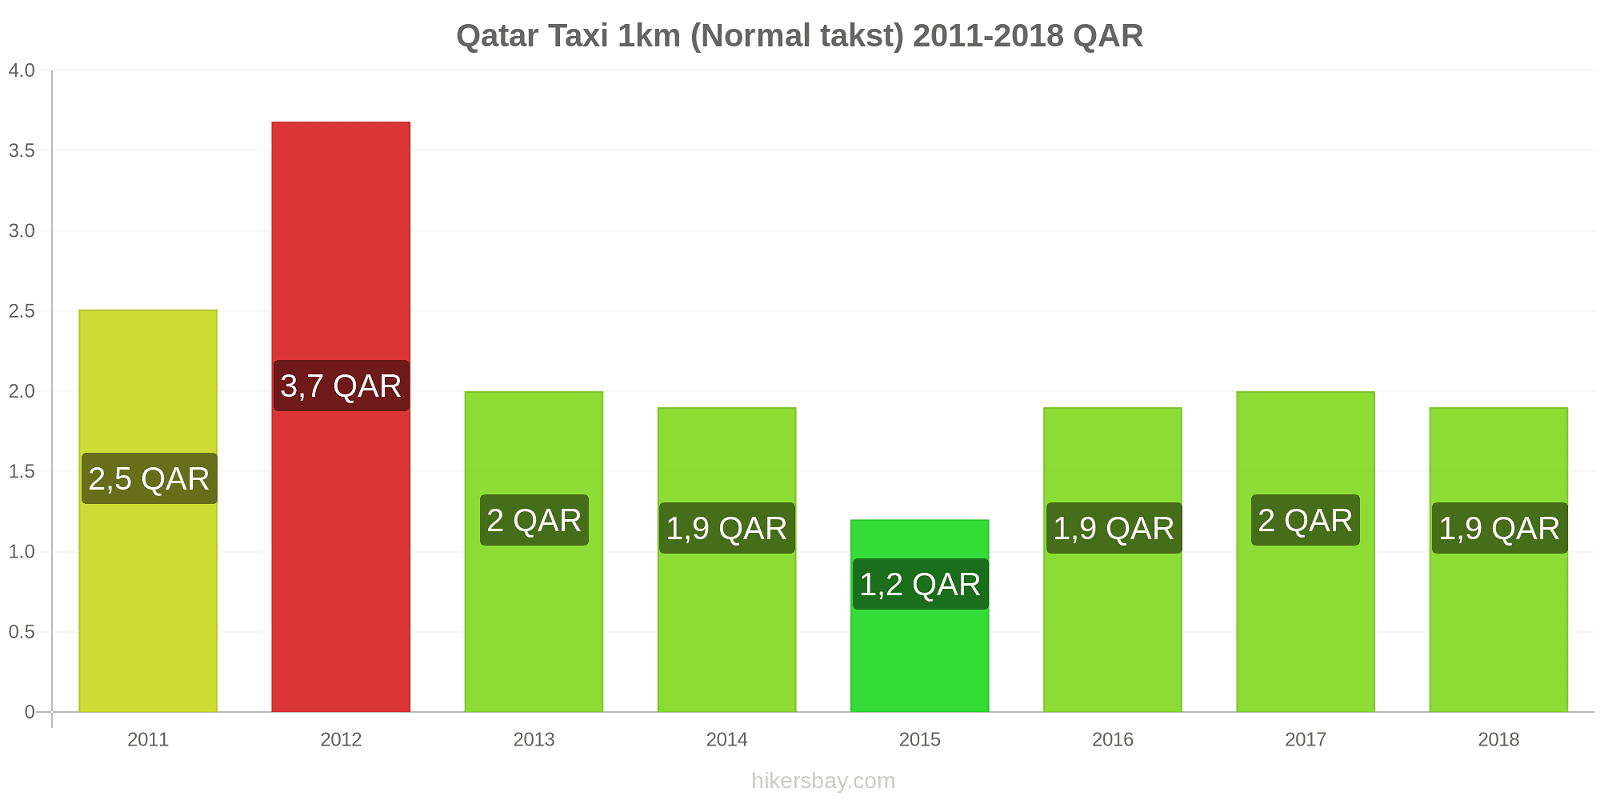 Qatar prisændringer Taxi 1km (normal takst) hikersbay.com